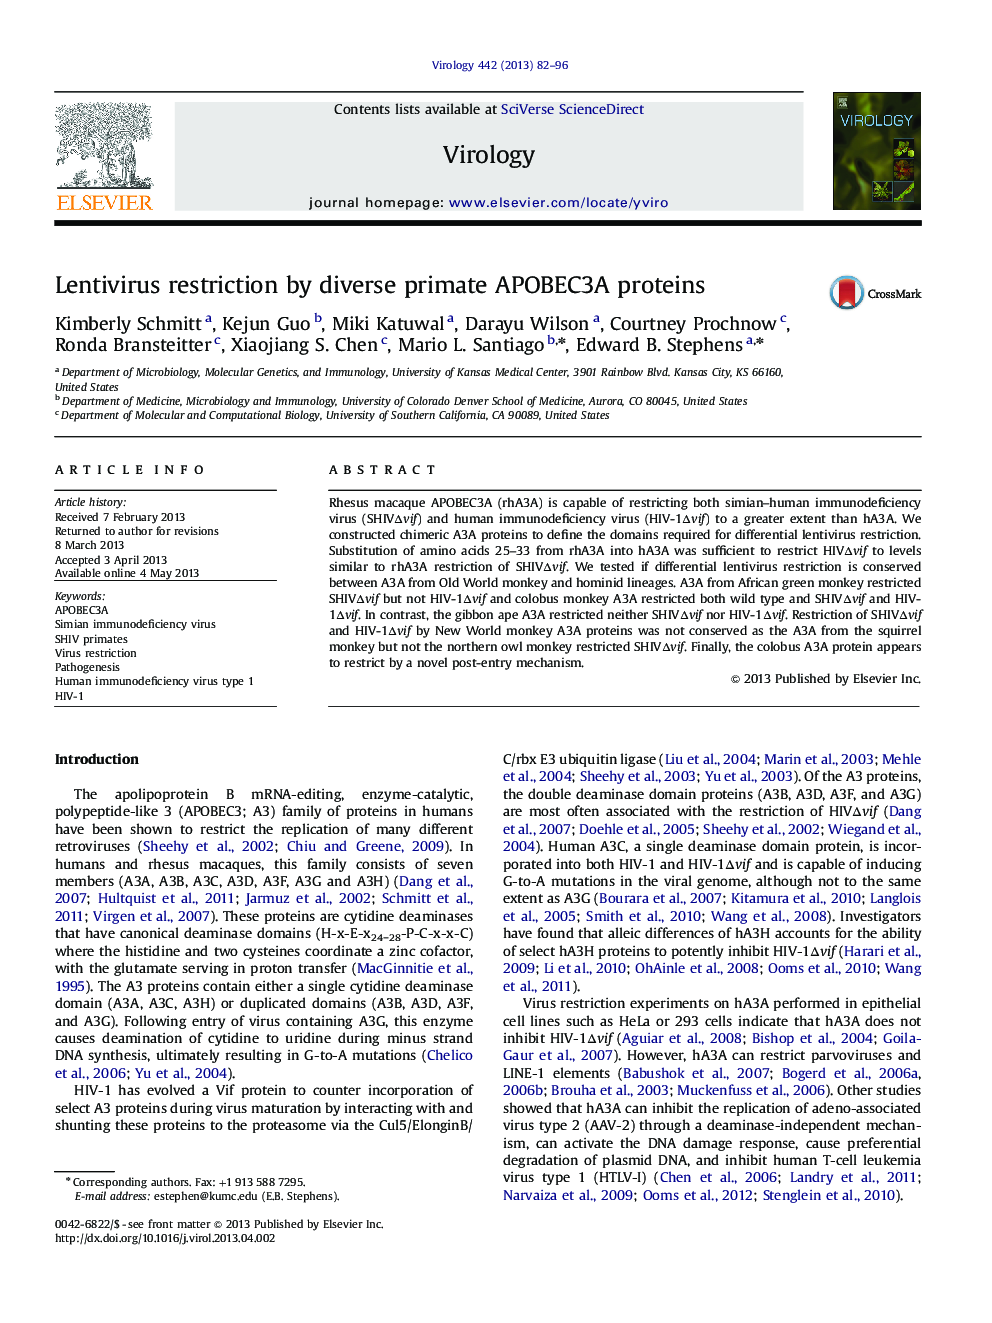 Lentivirus restriction by diverse primate APOBEC3A proteins